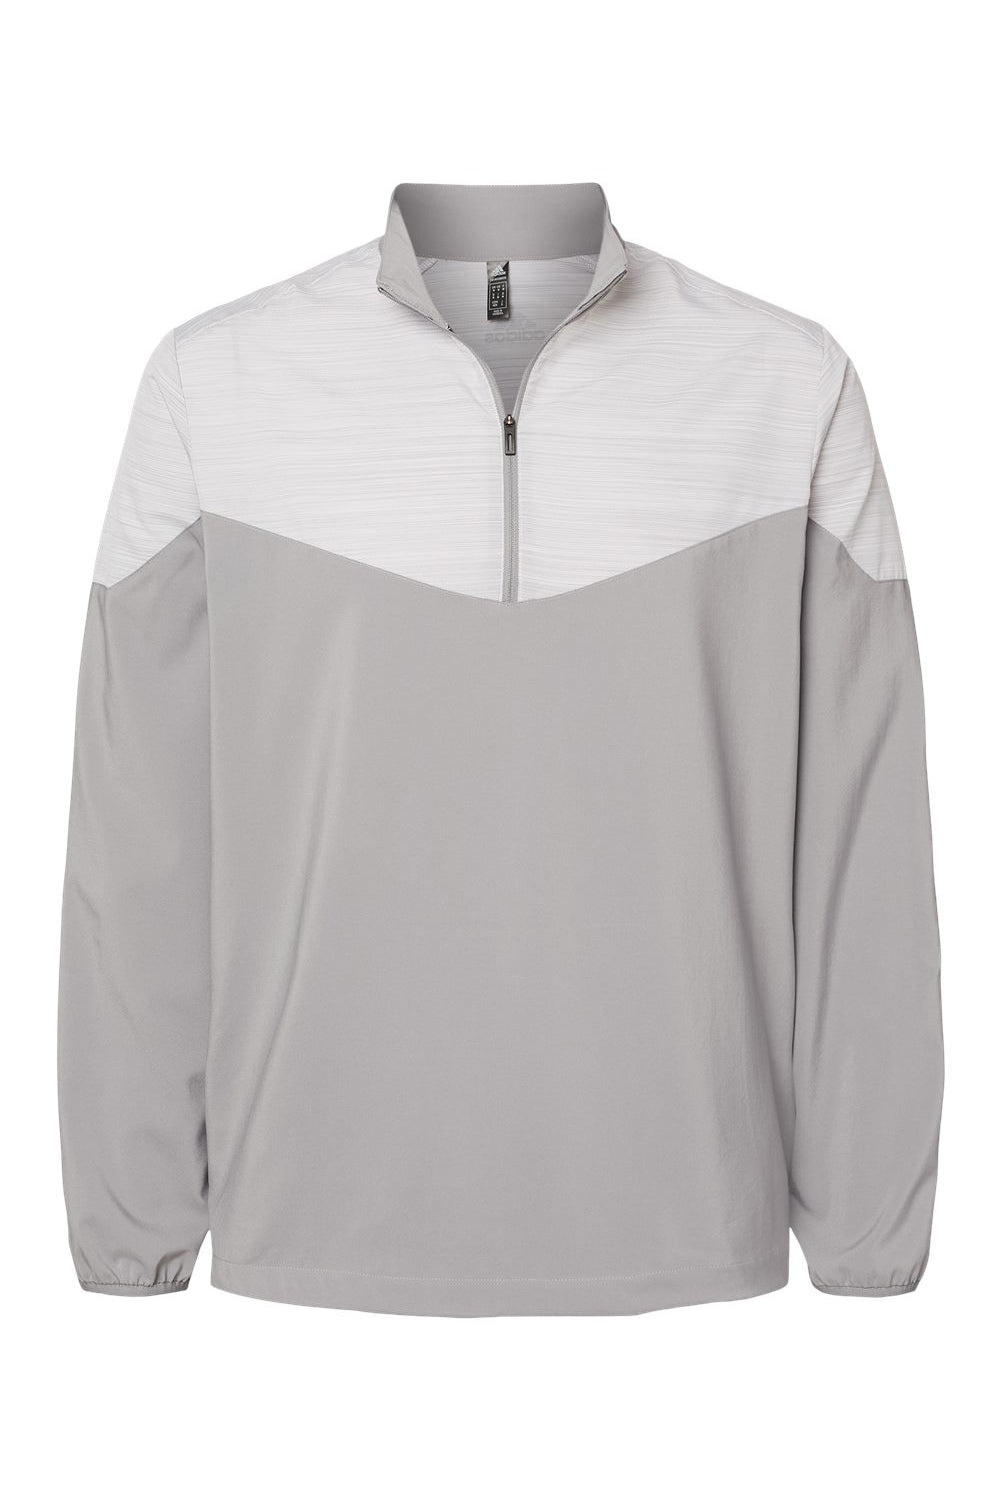 Adidas A546 Mens Chevron Water Resistant 1/4 Zip Windshirt Jacket Grey/Heather Grey Flat Front